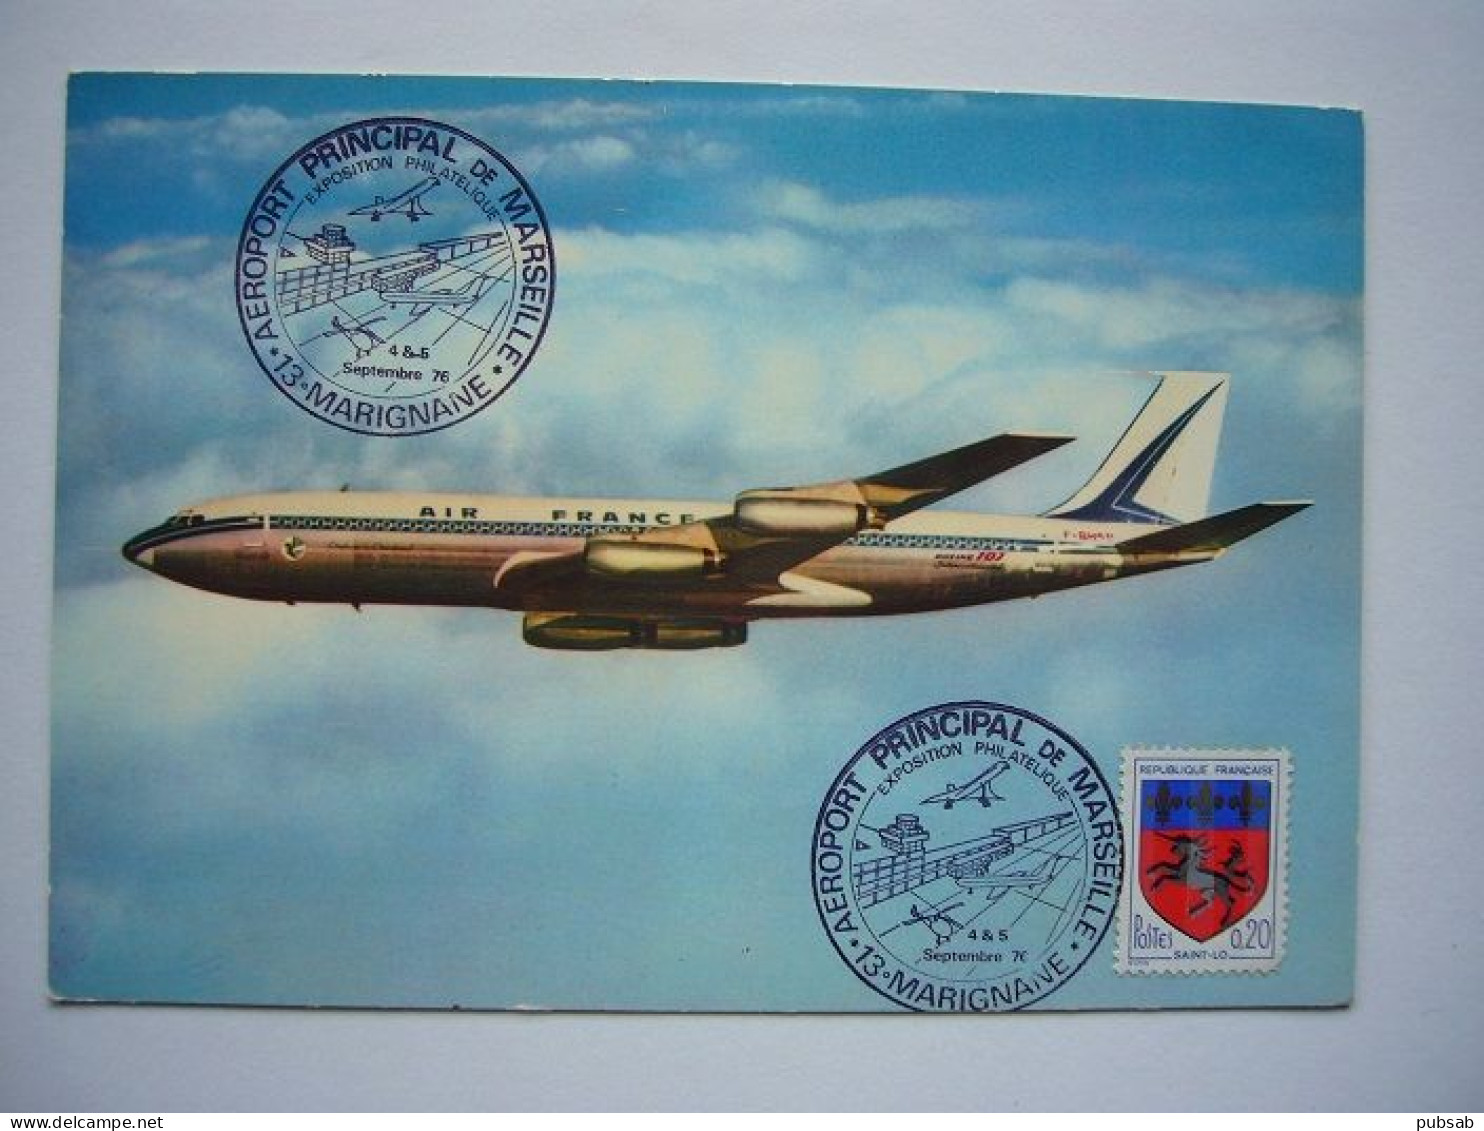 Avion / Airplane / AIR FRANCE / Boeing 707/ Carte Maximum / Stamp "Aéroport Peincipal De Marseille" - 1946-....: Ere Moderne